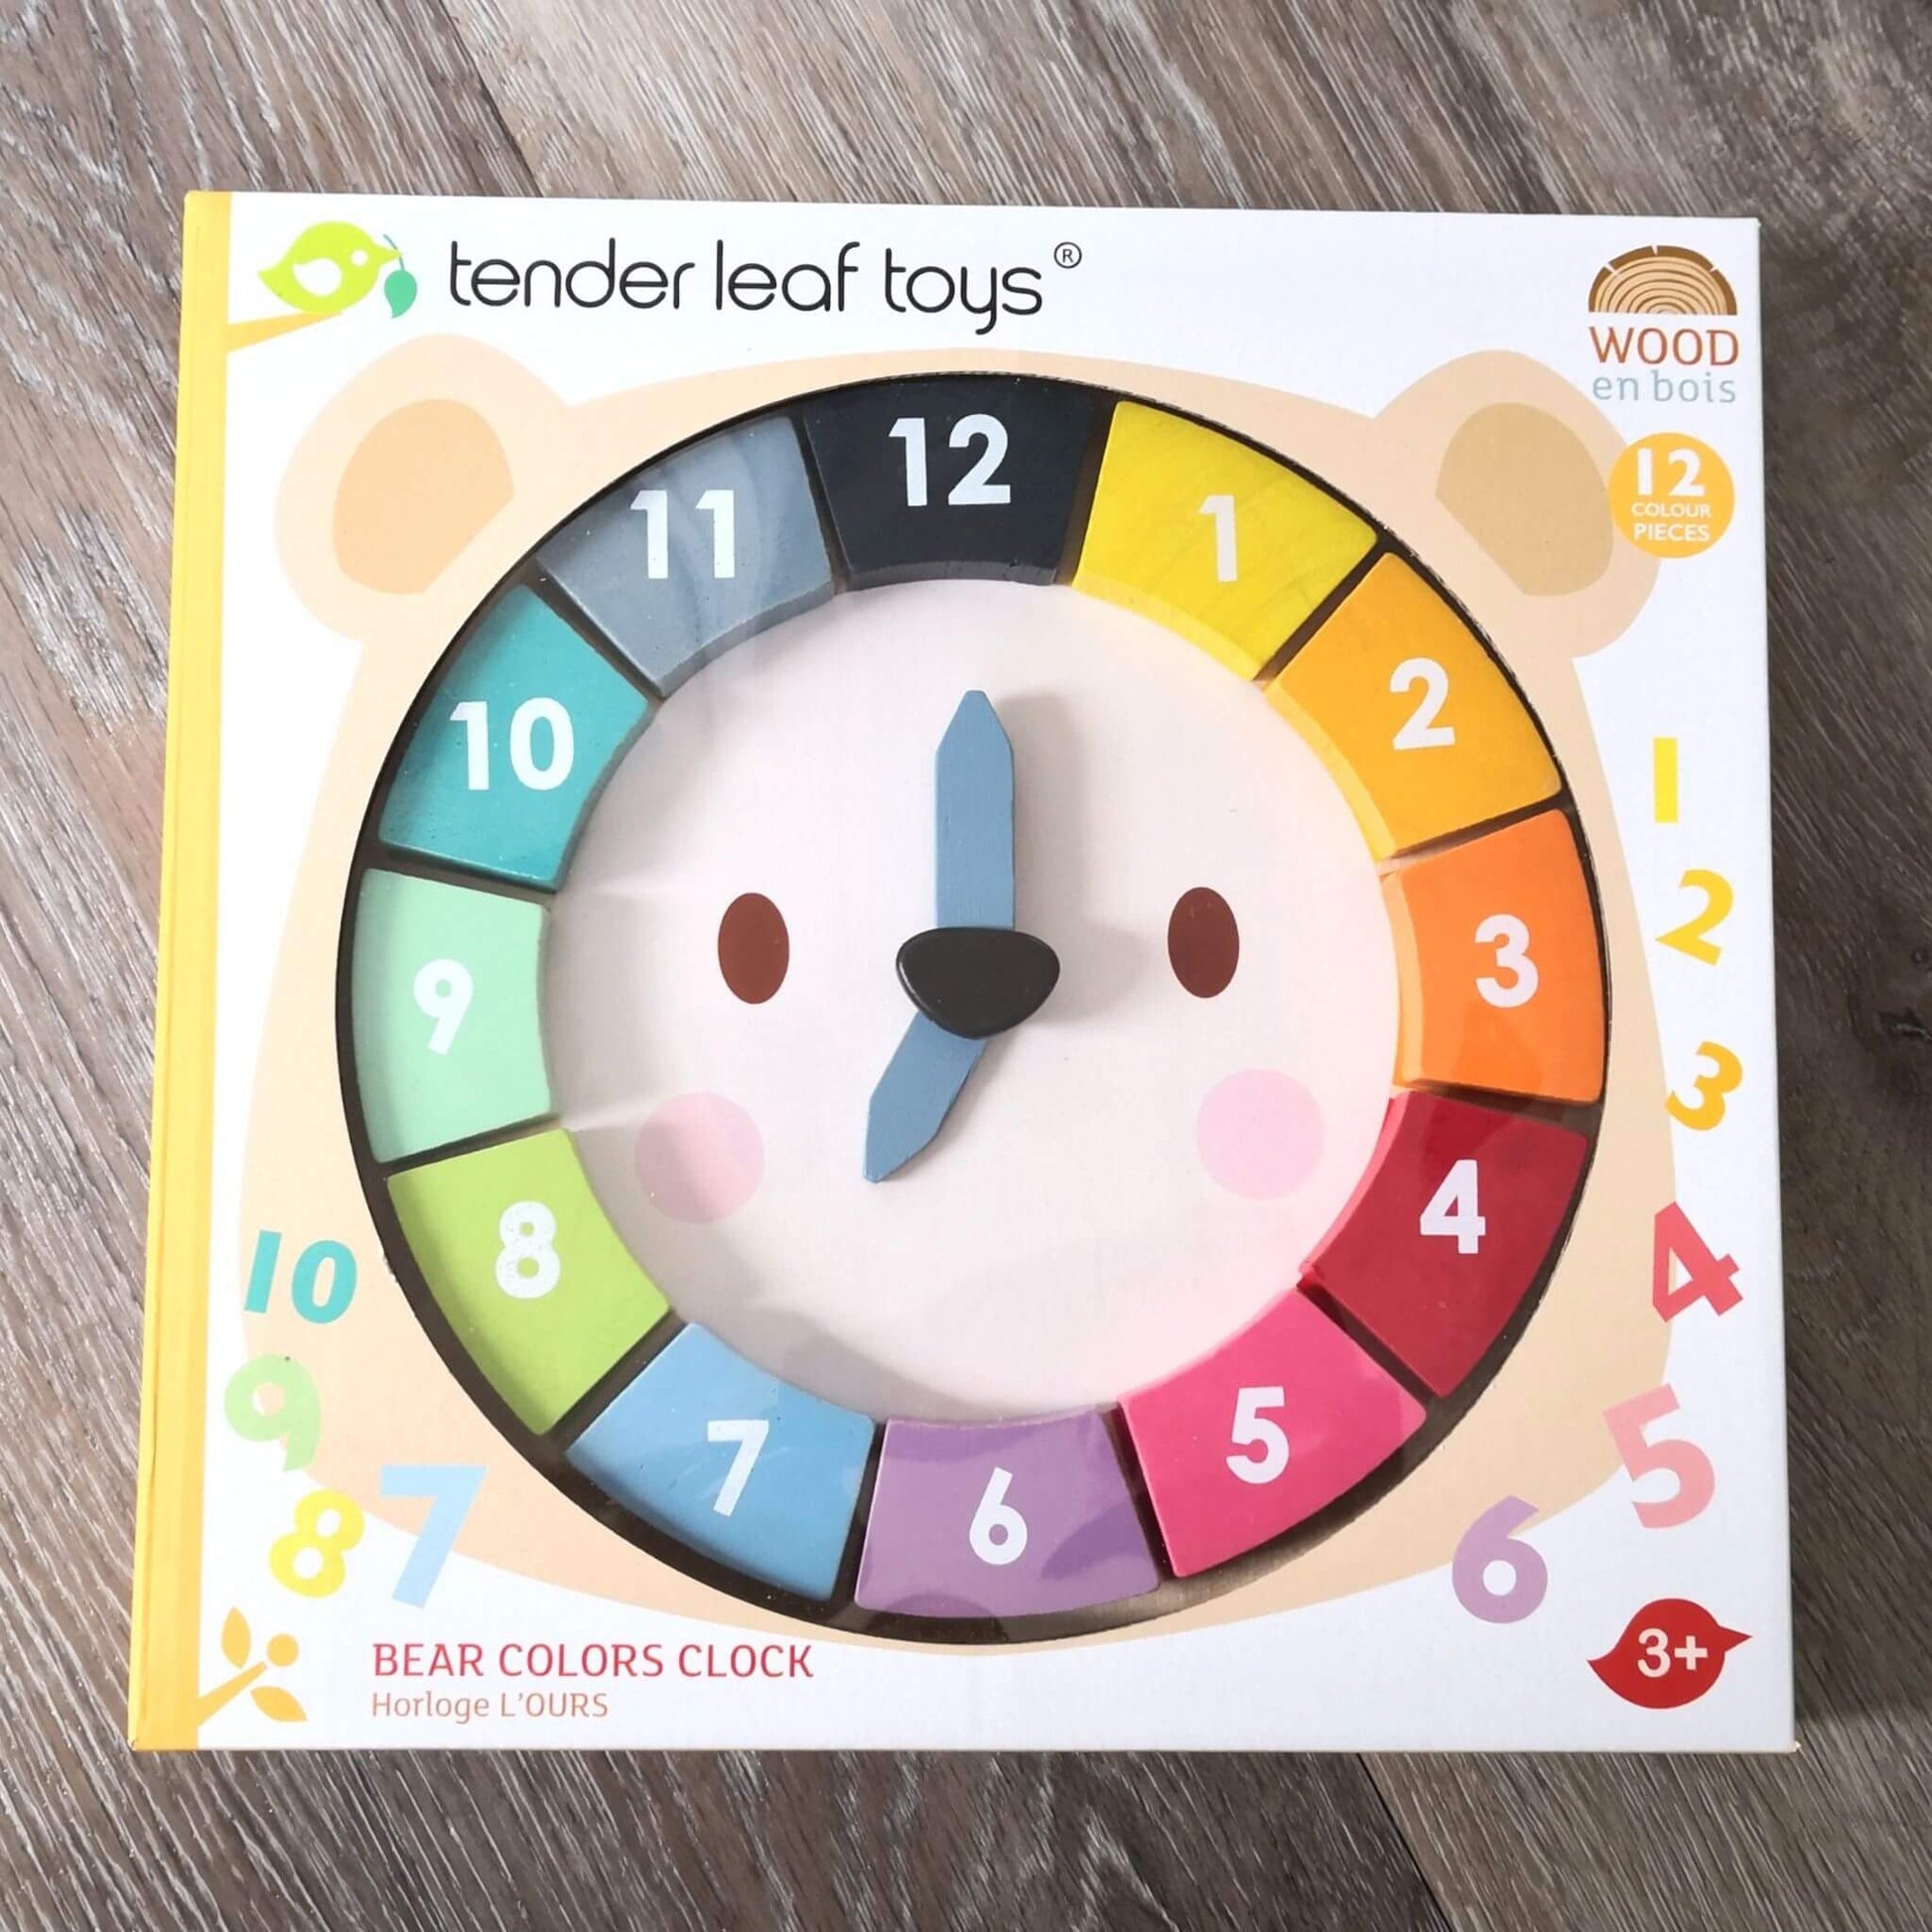 Bear colours clock - Tender leaf Toys